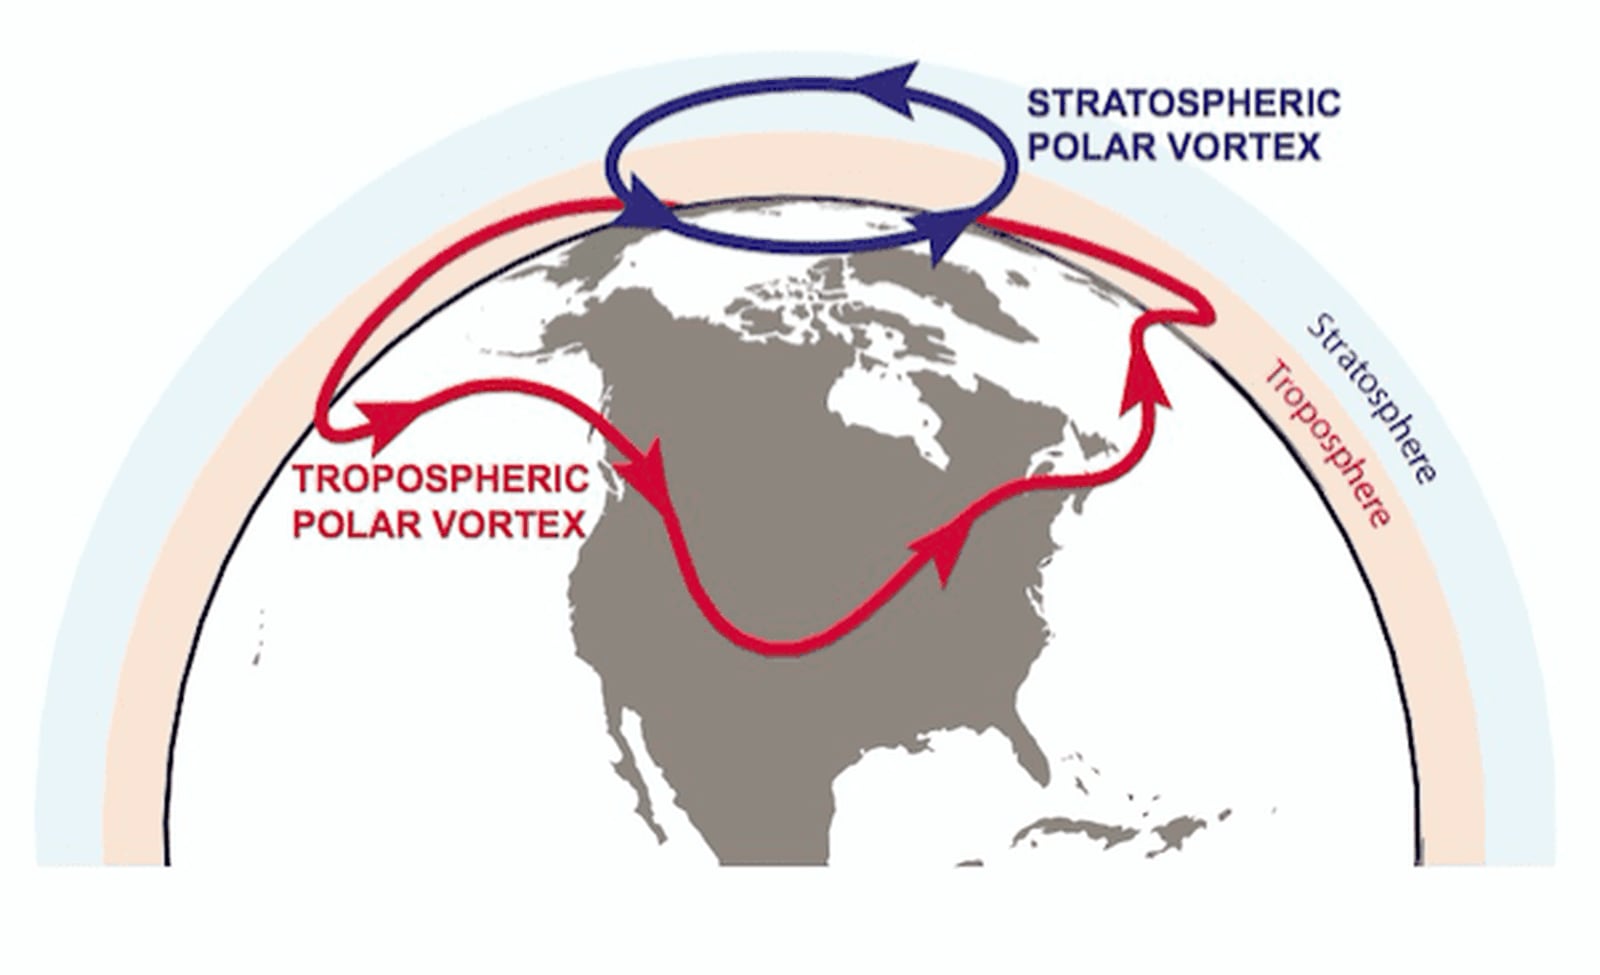 Polar Vortex disruption expected due to Stratospheric Warming event